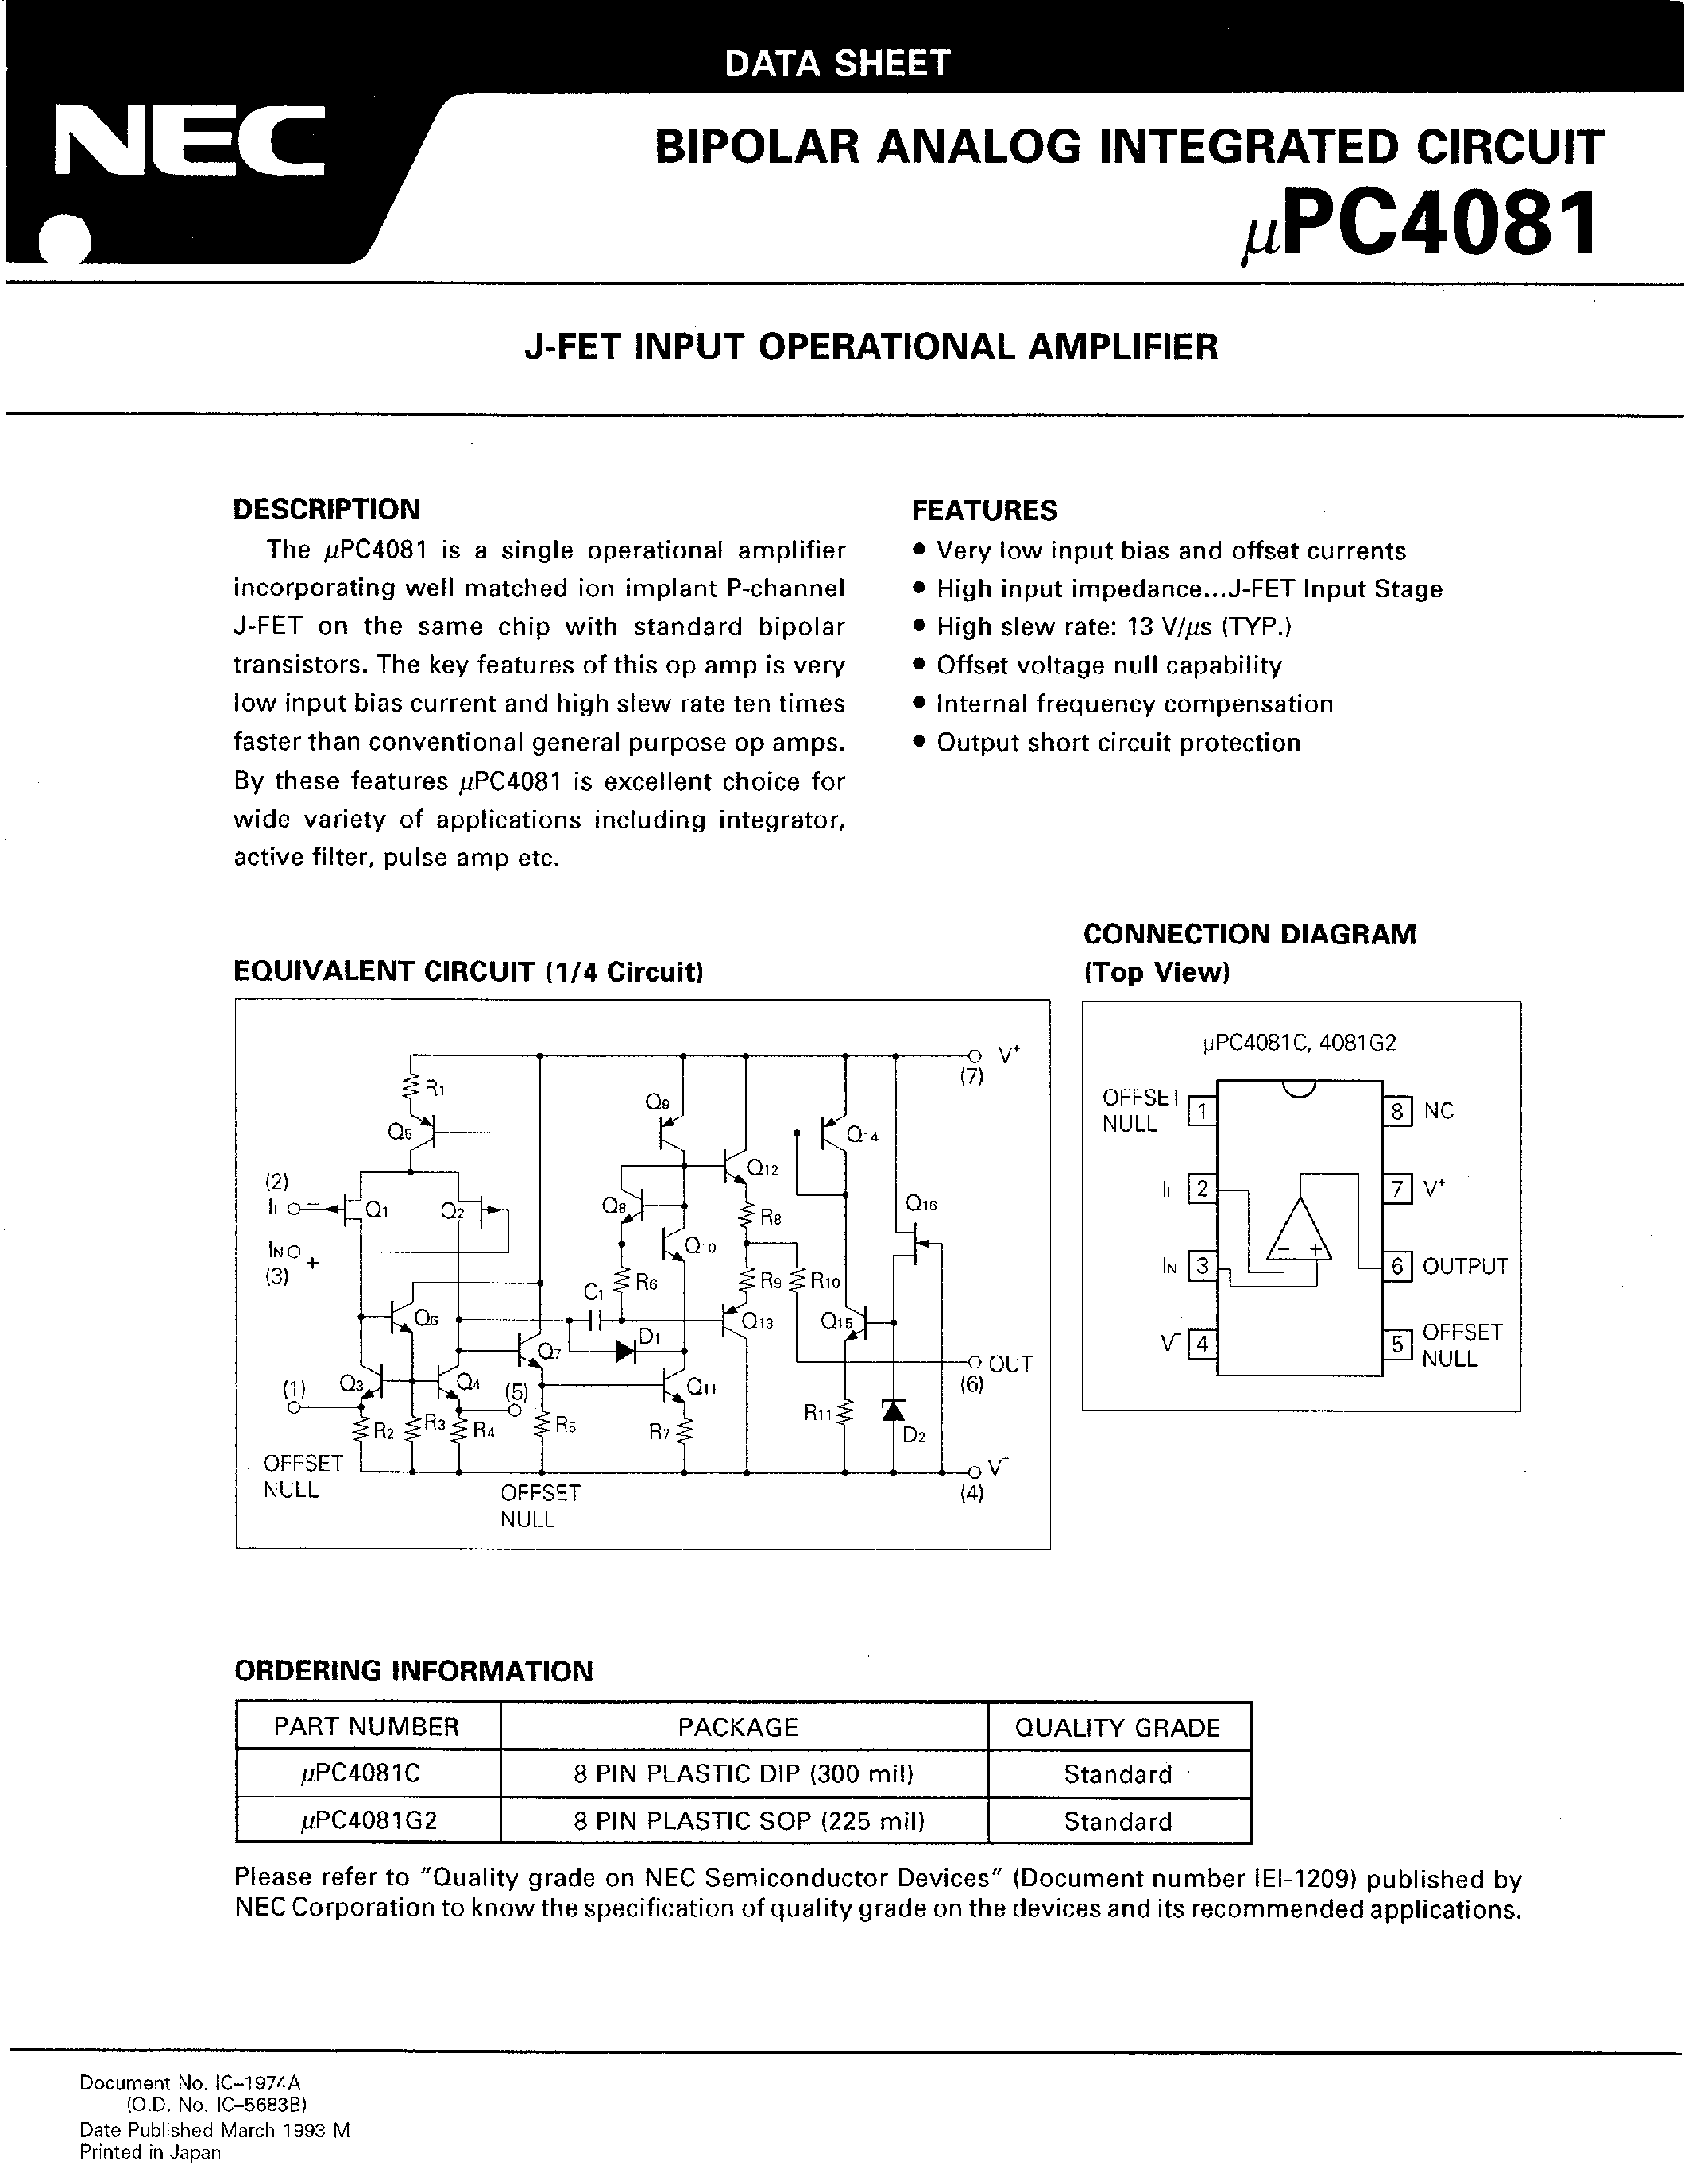 Datasheet UPC4081C - J-FET INPUT OPERATIONAL AMPLIFIER page 1